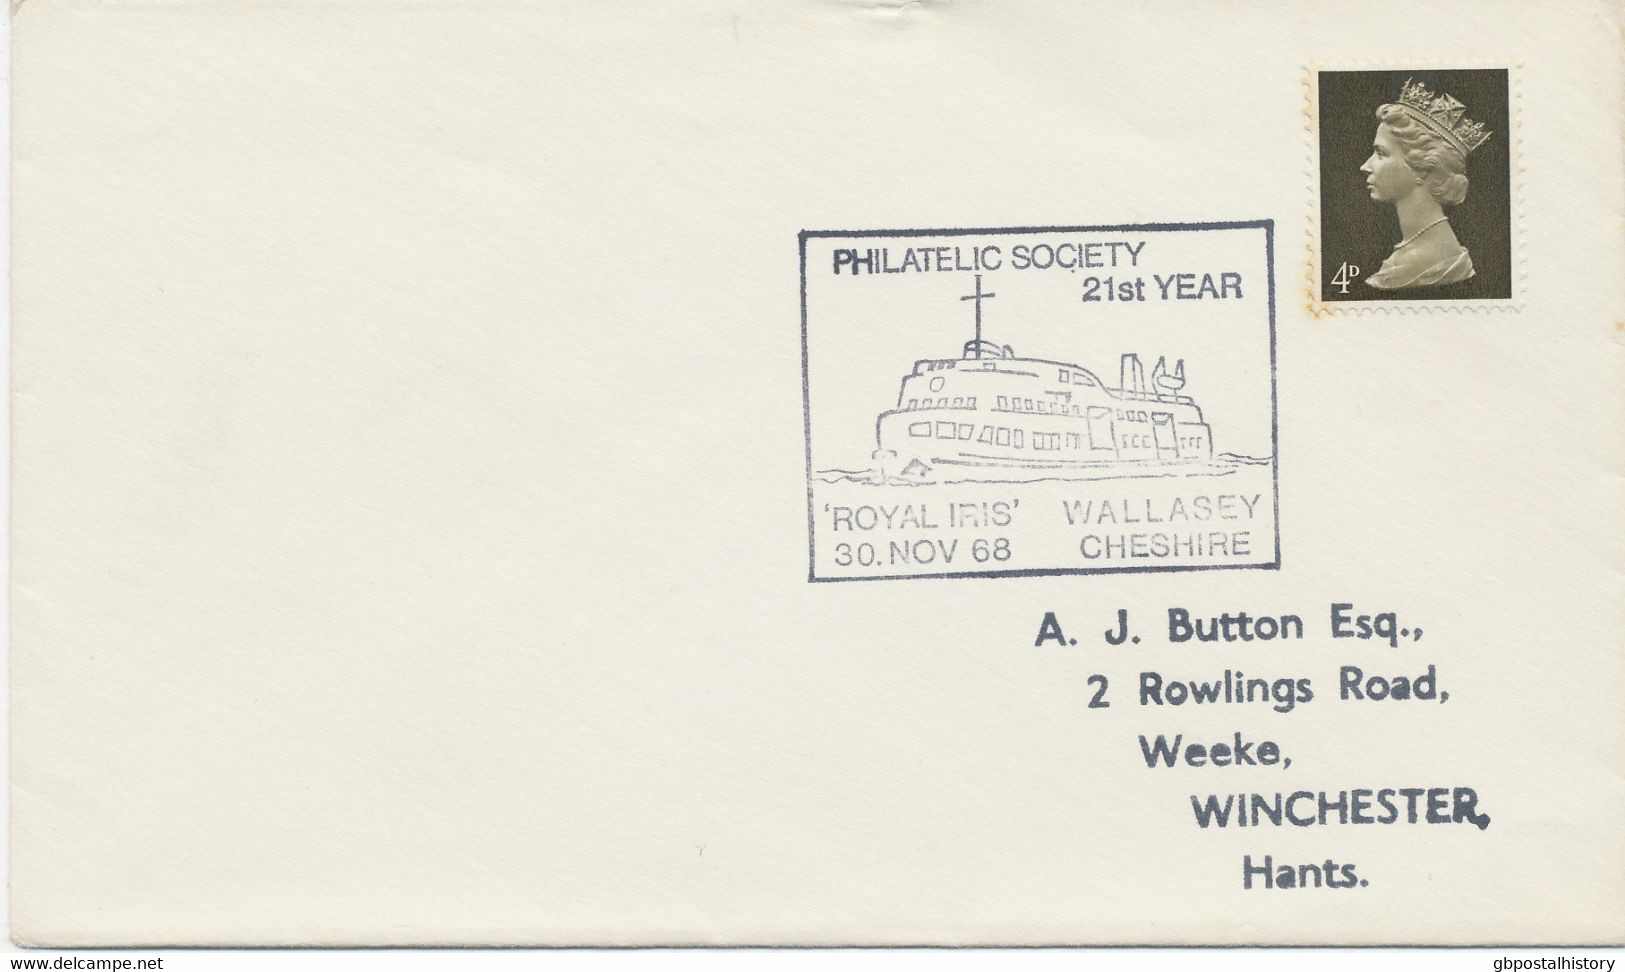 GB SPECIAL EVENT POSTMARKS PHILATELY 1968 Philatelic Society 21st Year 'Royal Iris' Wallasey Cheshire - Storia Postale